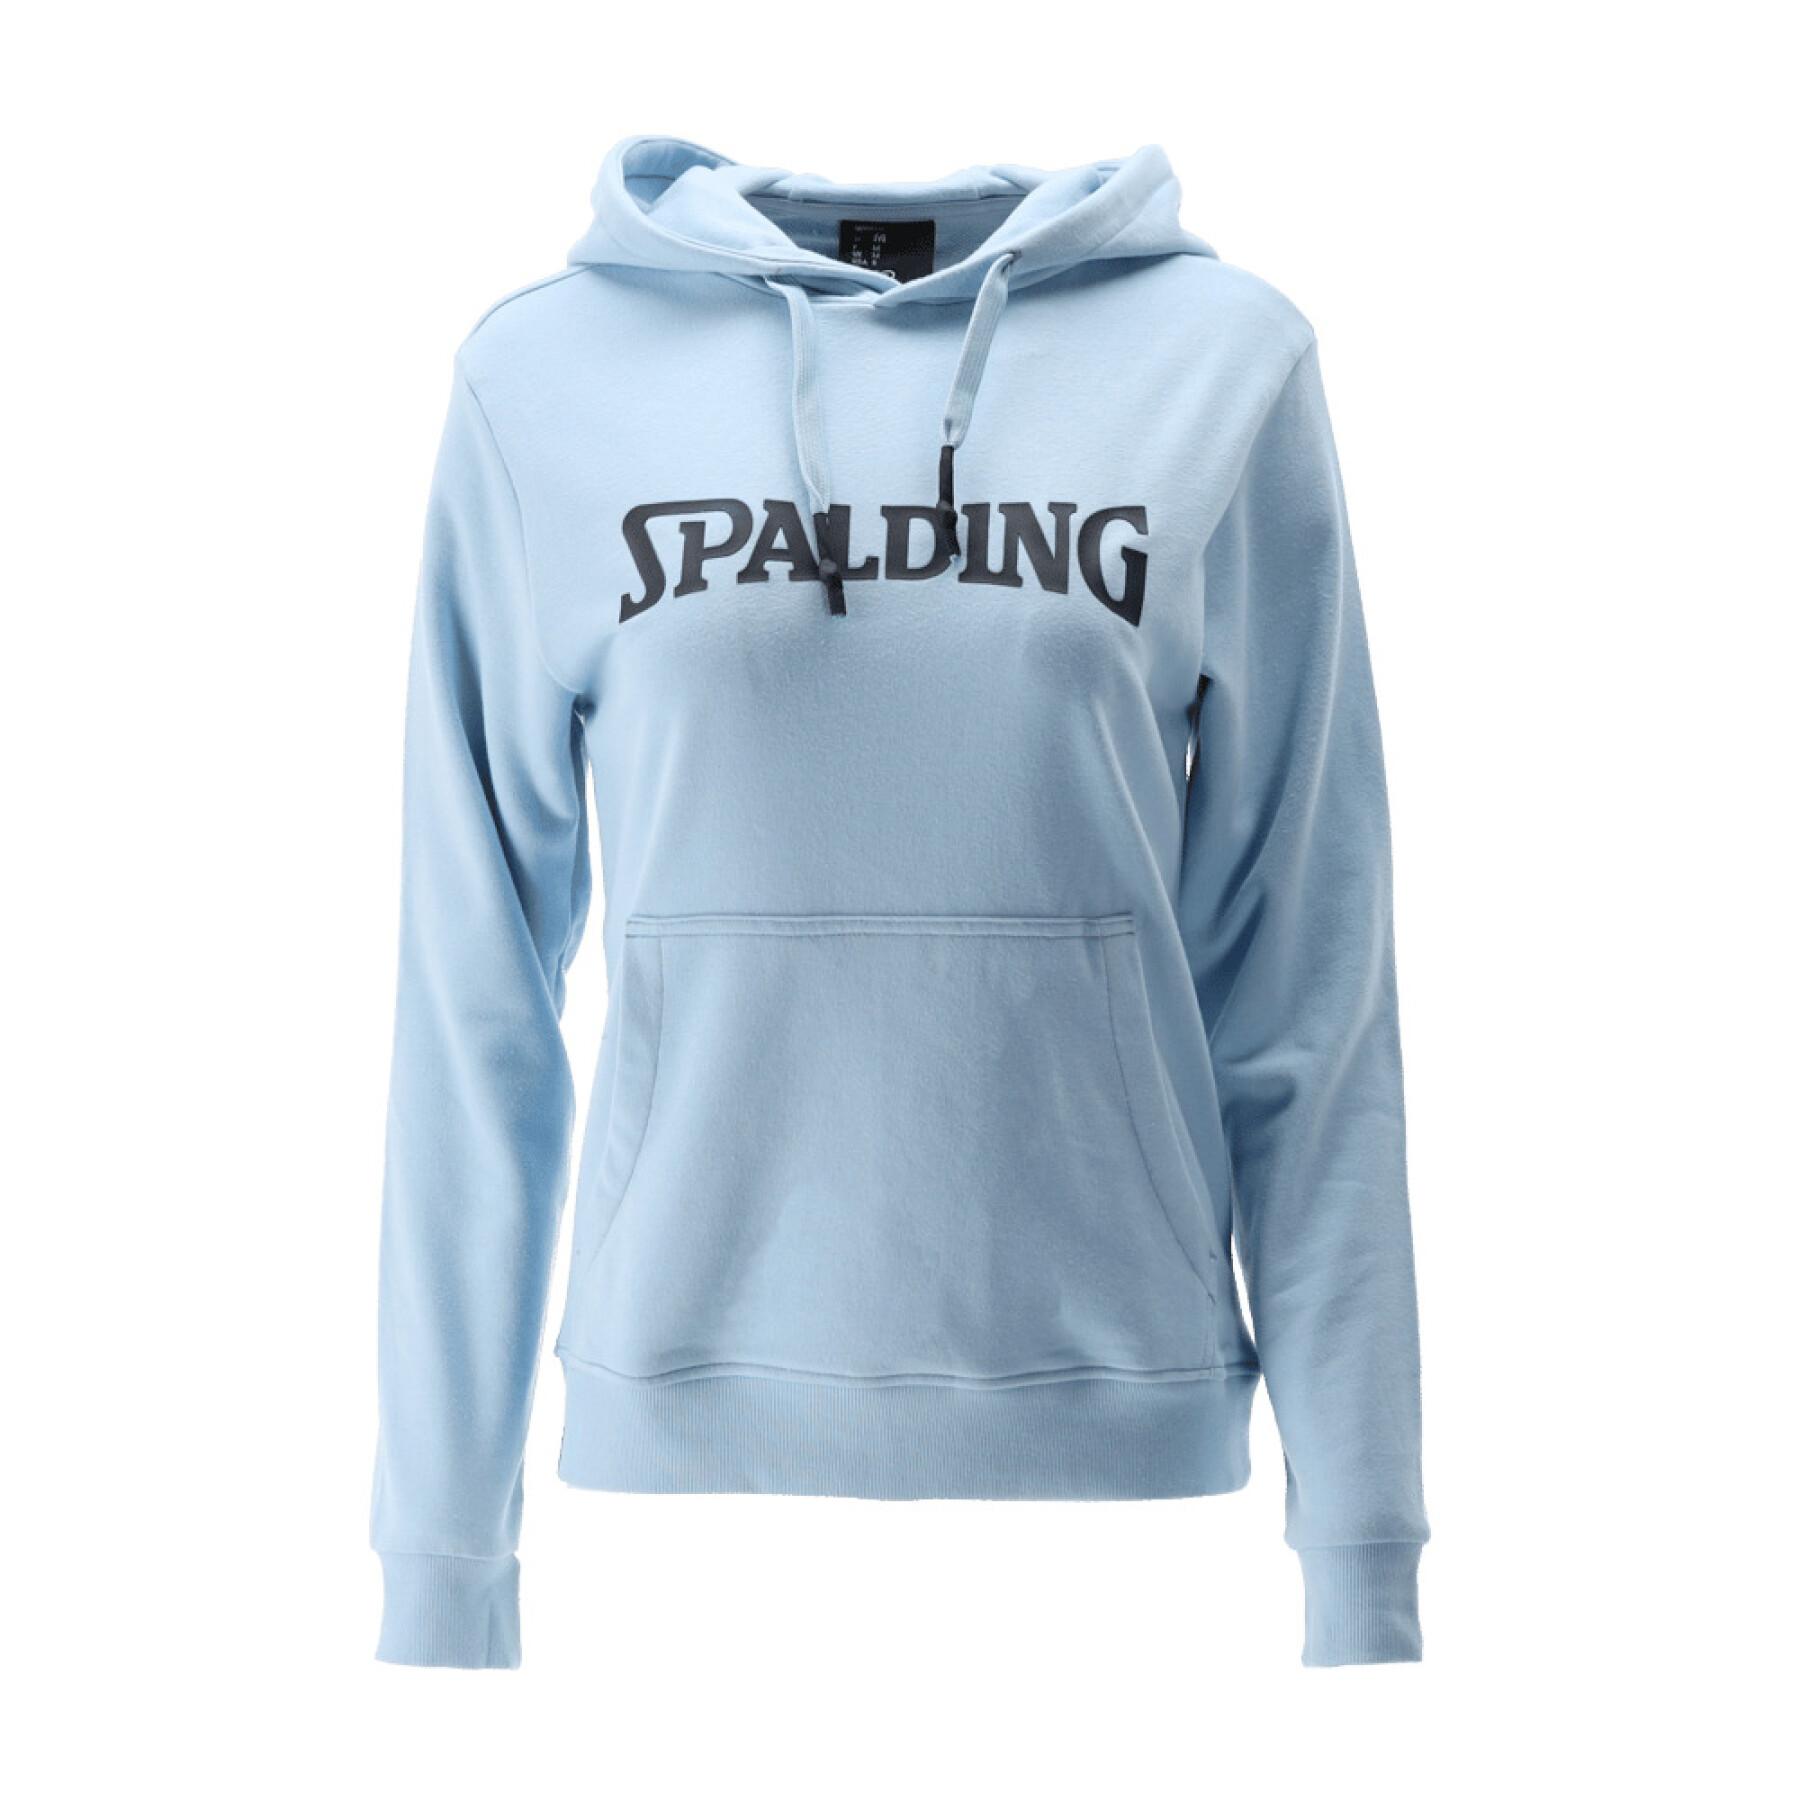 Sweatshirt women's hoodie Spalding